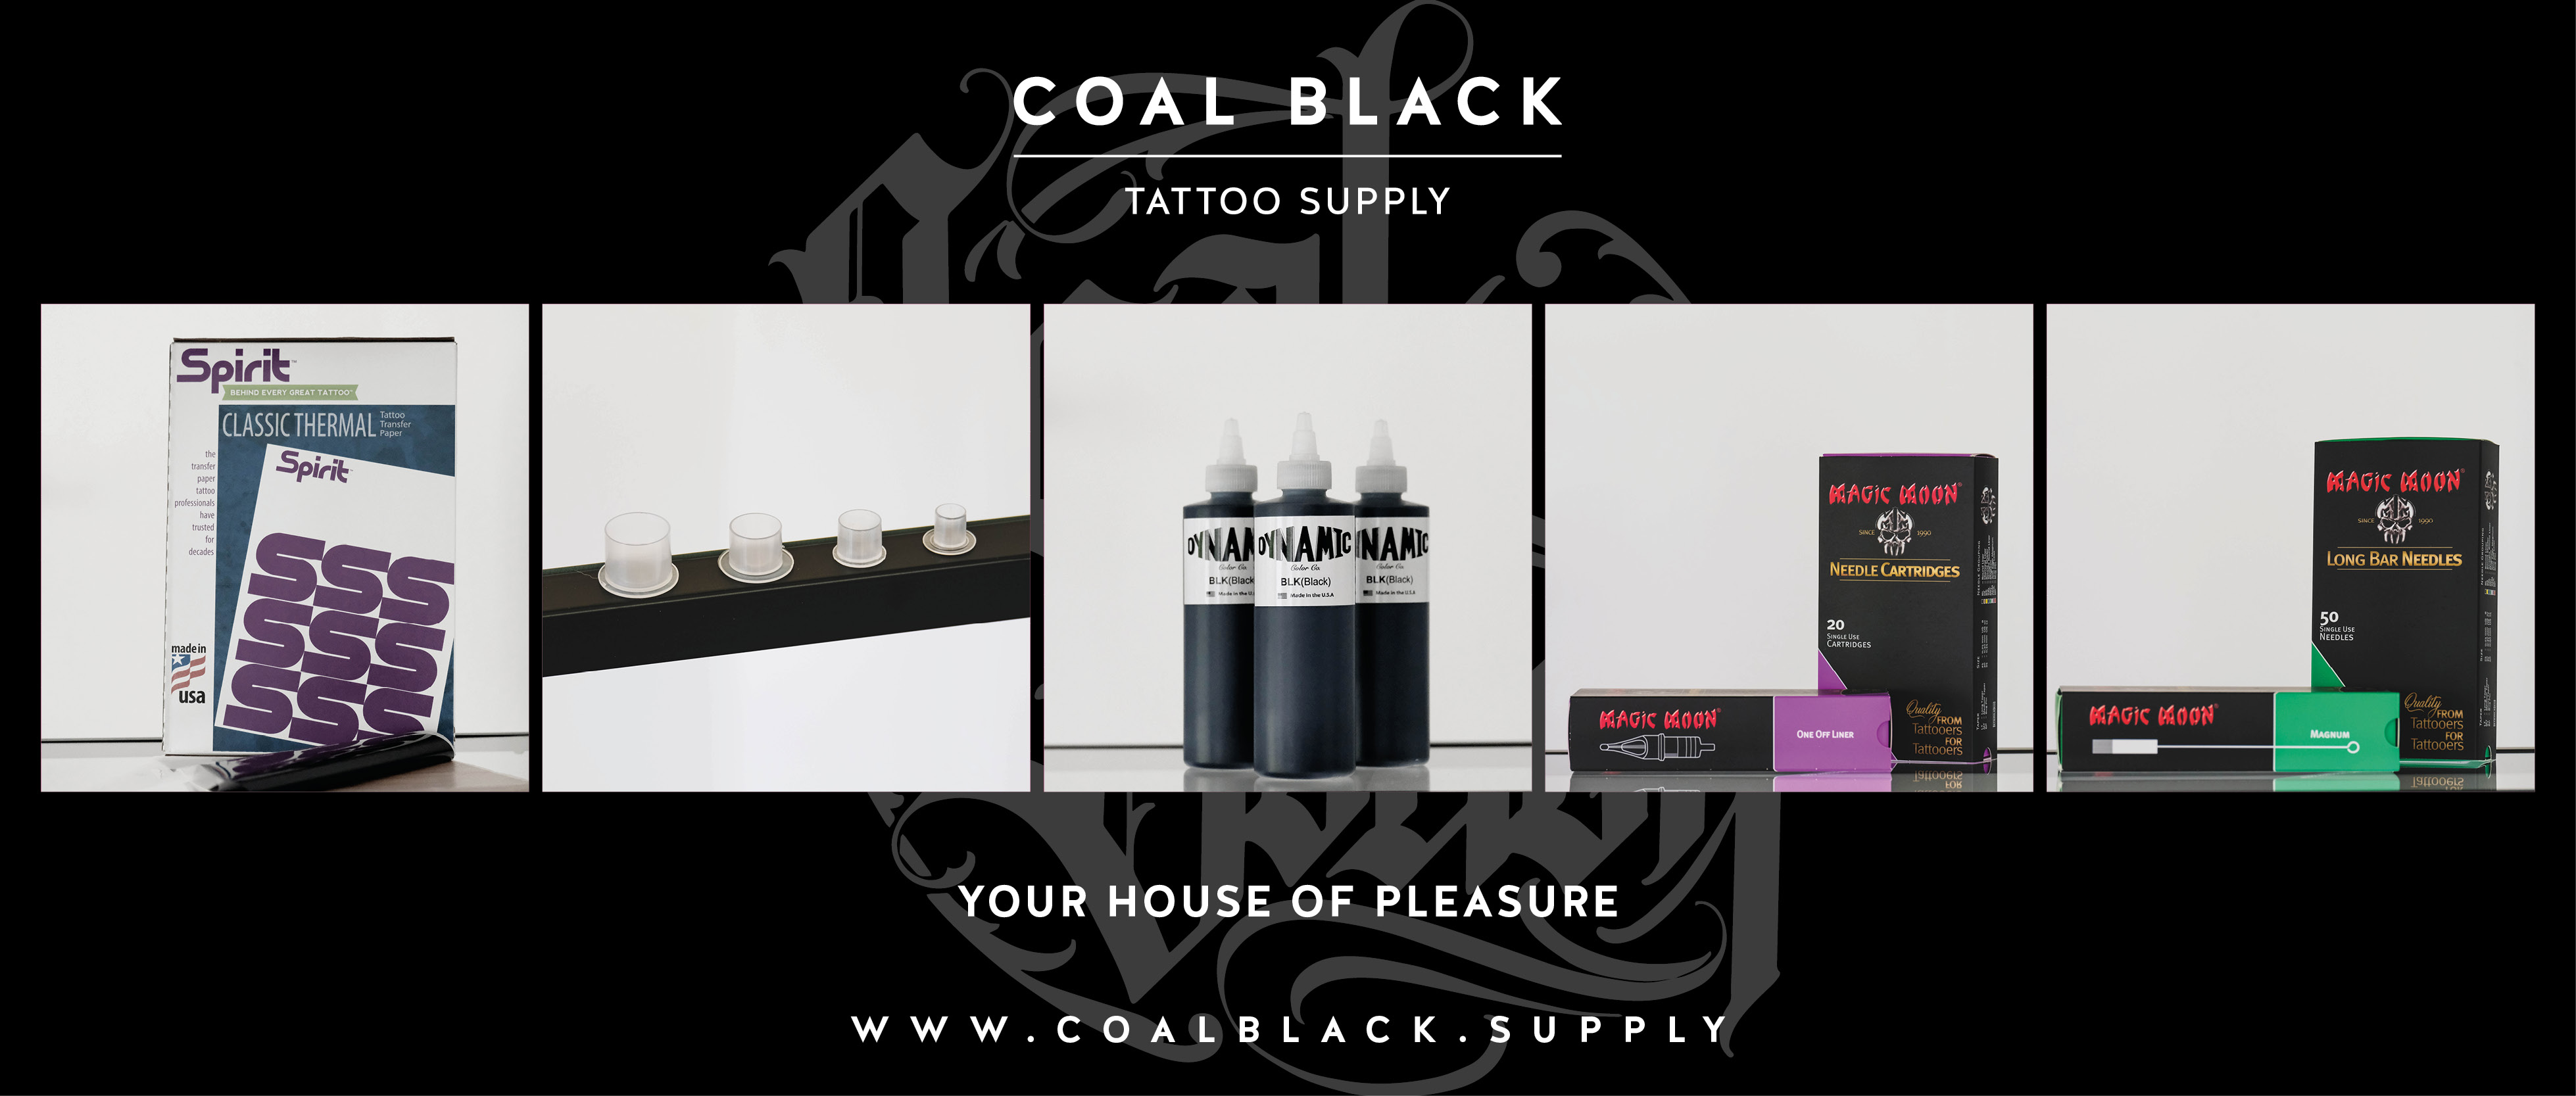 Coal Black - Tattoo Products